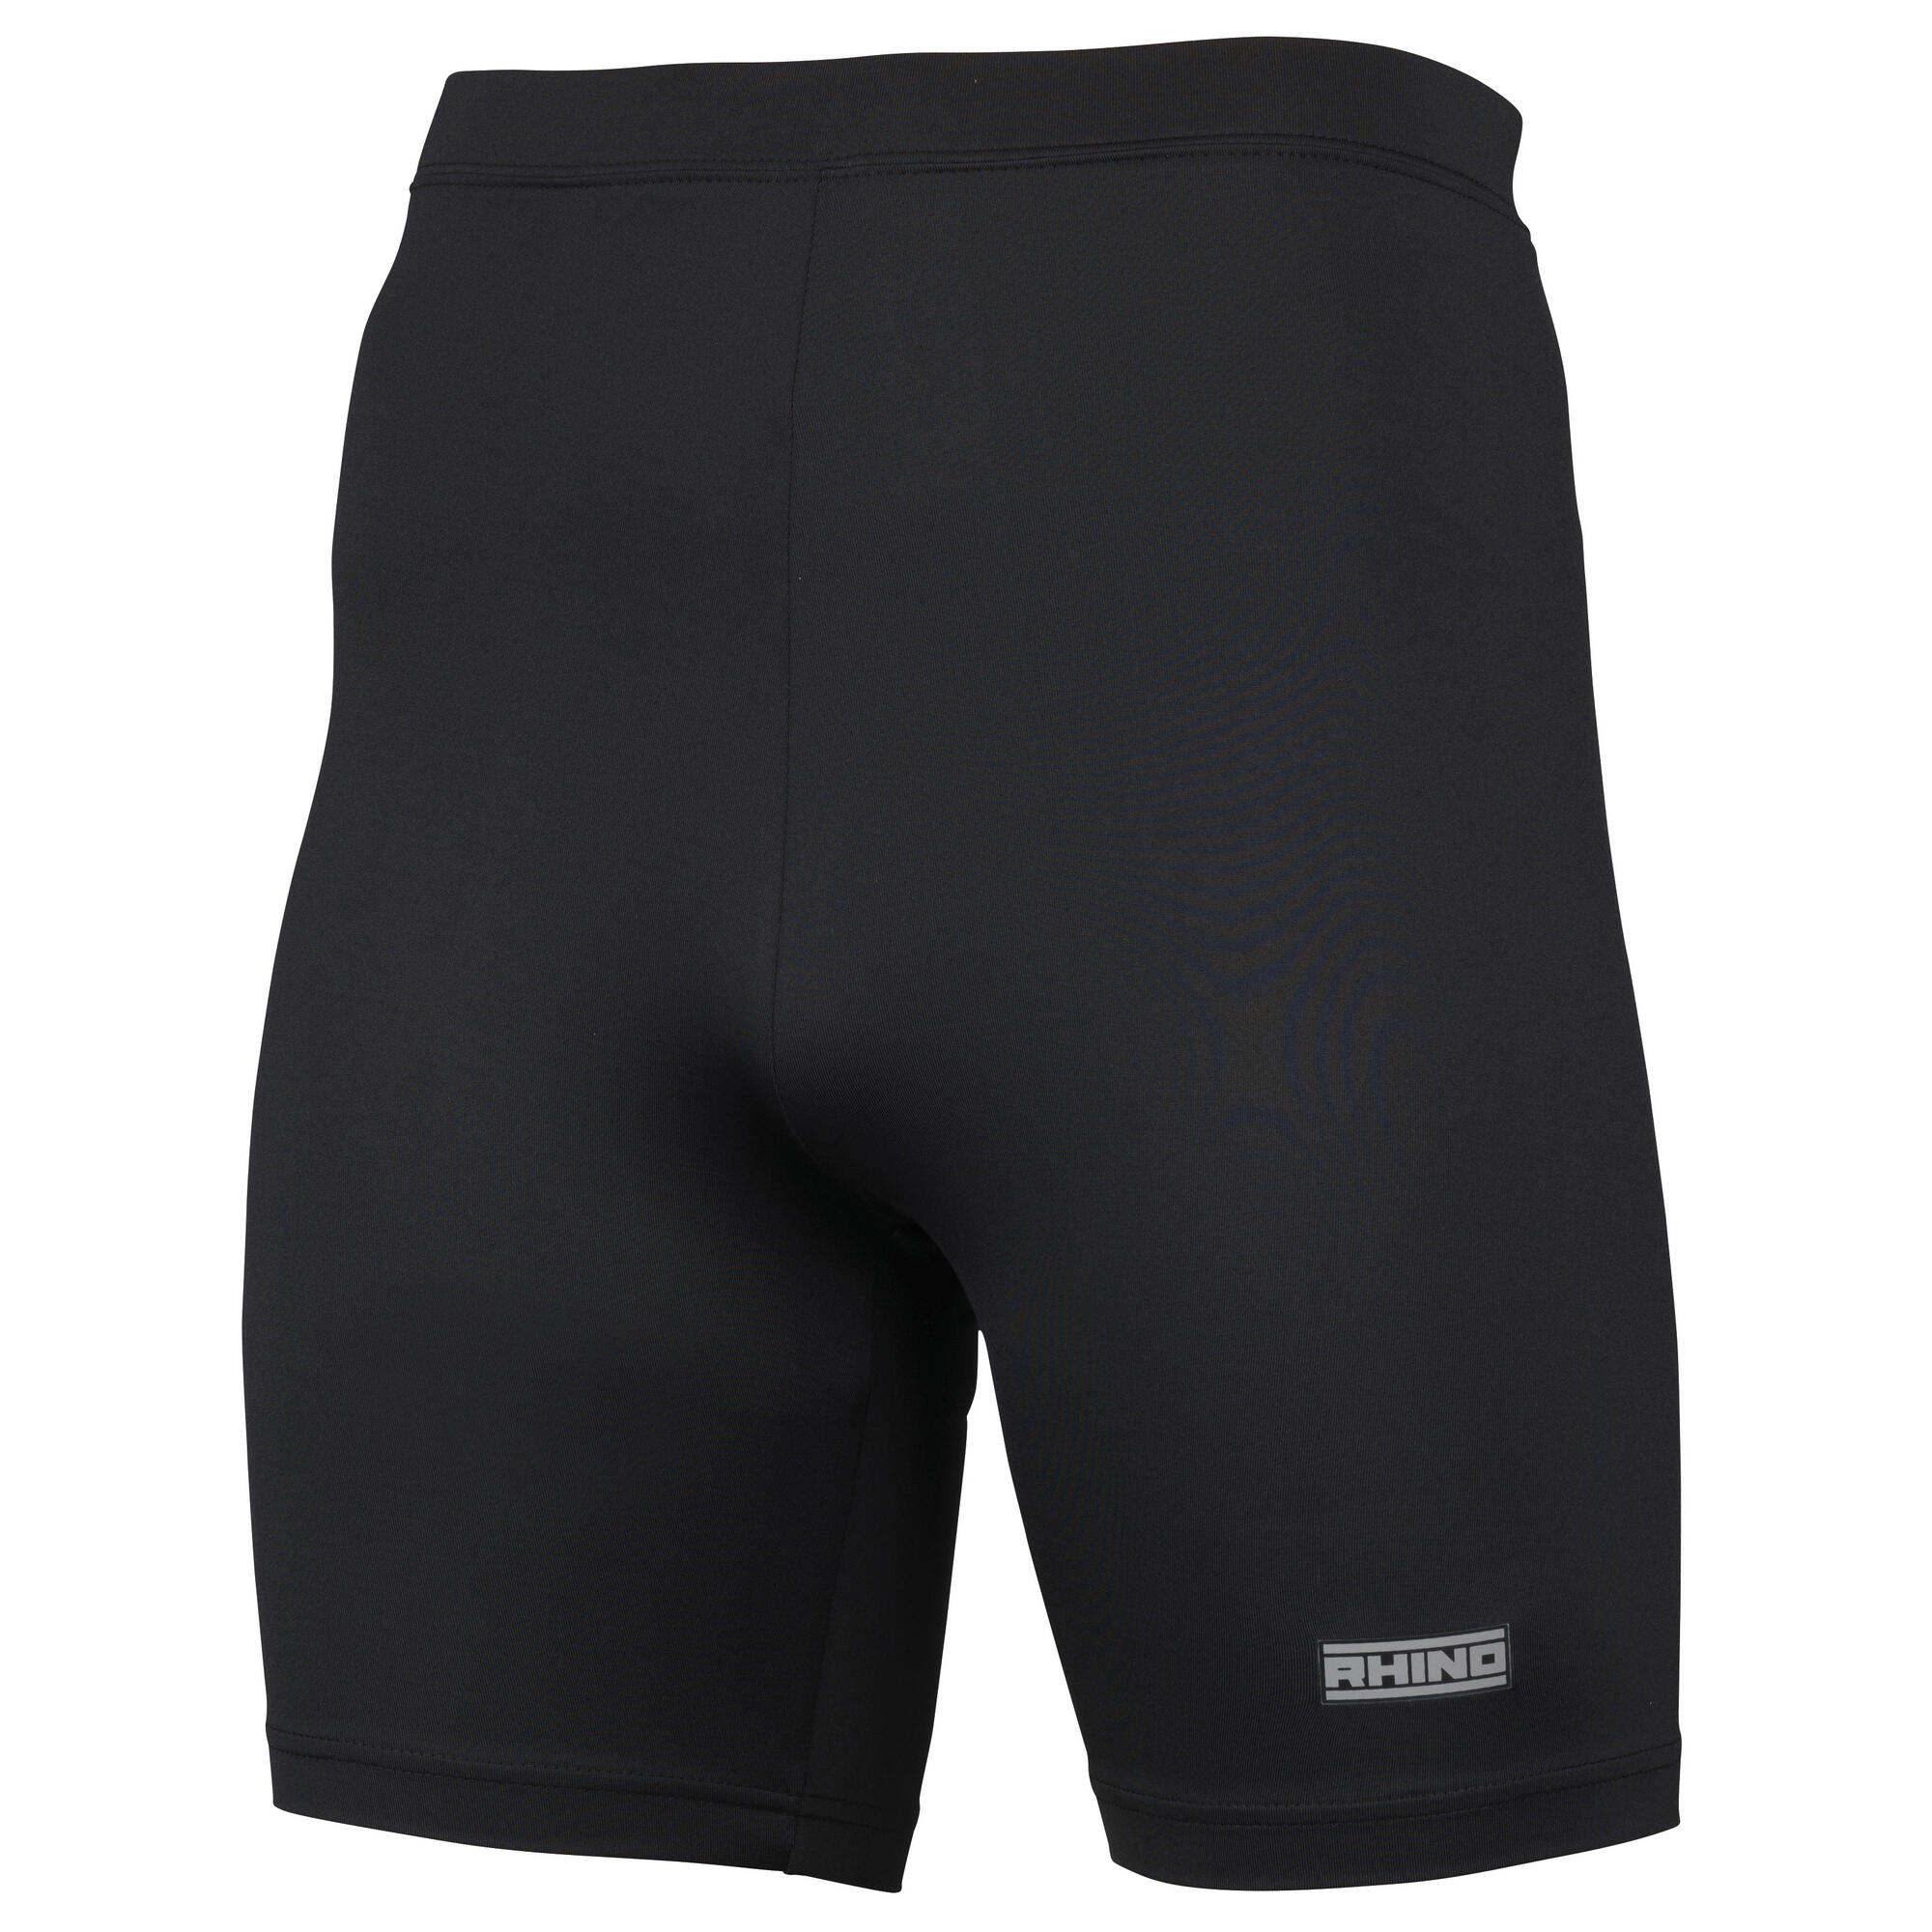 RHINO Mens Sports Base Layer Shorts (Black)